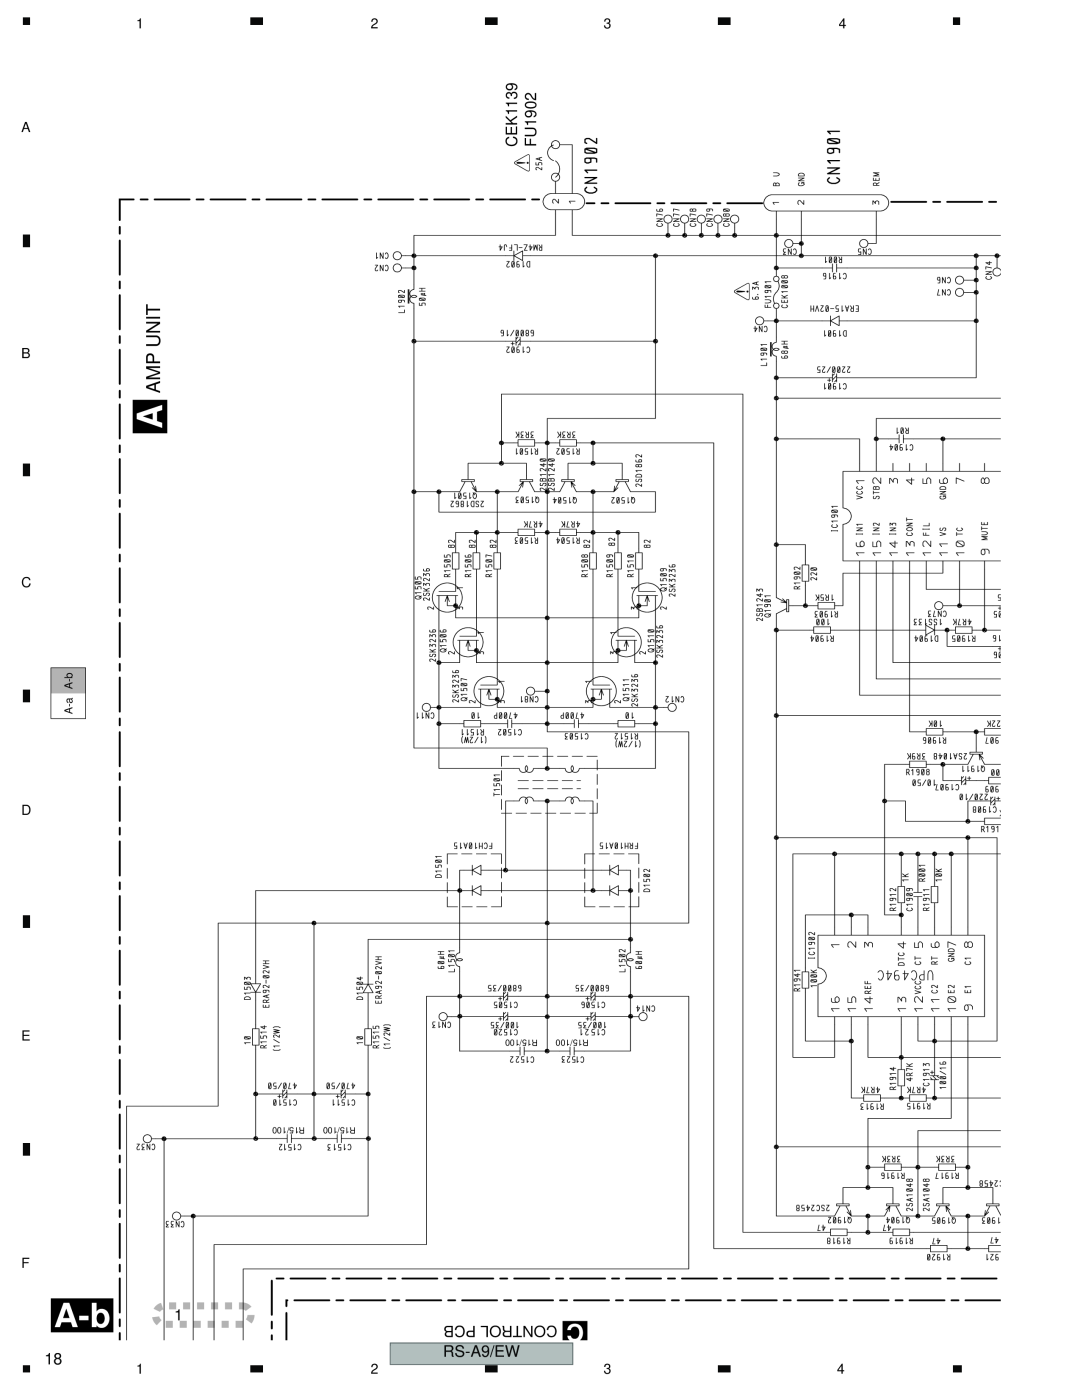 Pioneer RS-A9/EW manual Amp Unit, CEK1139, FU1902, Pcb Control C 